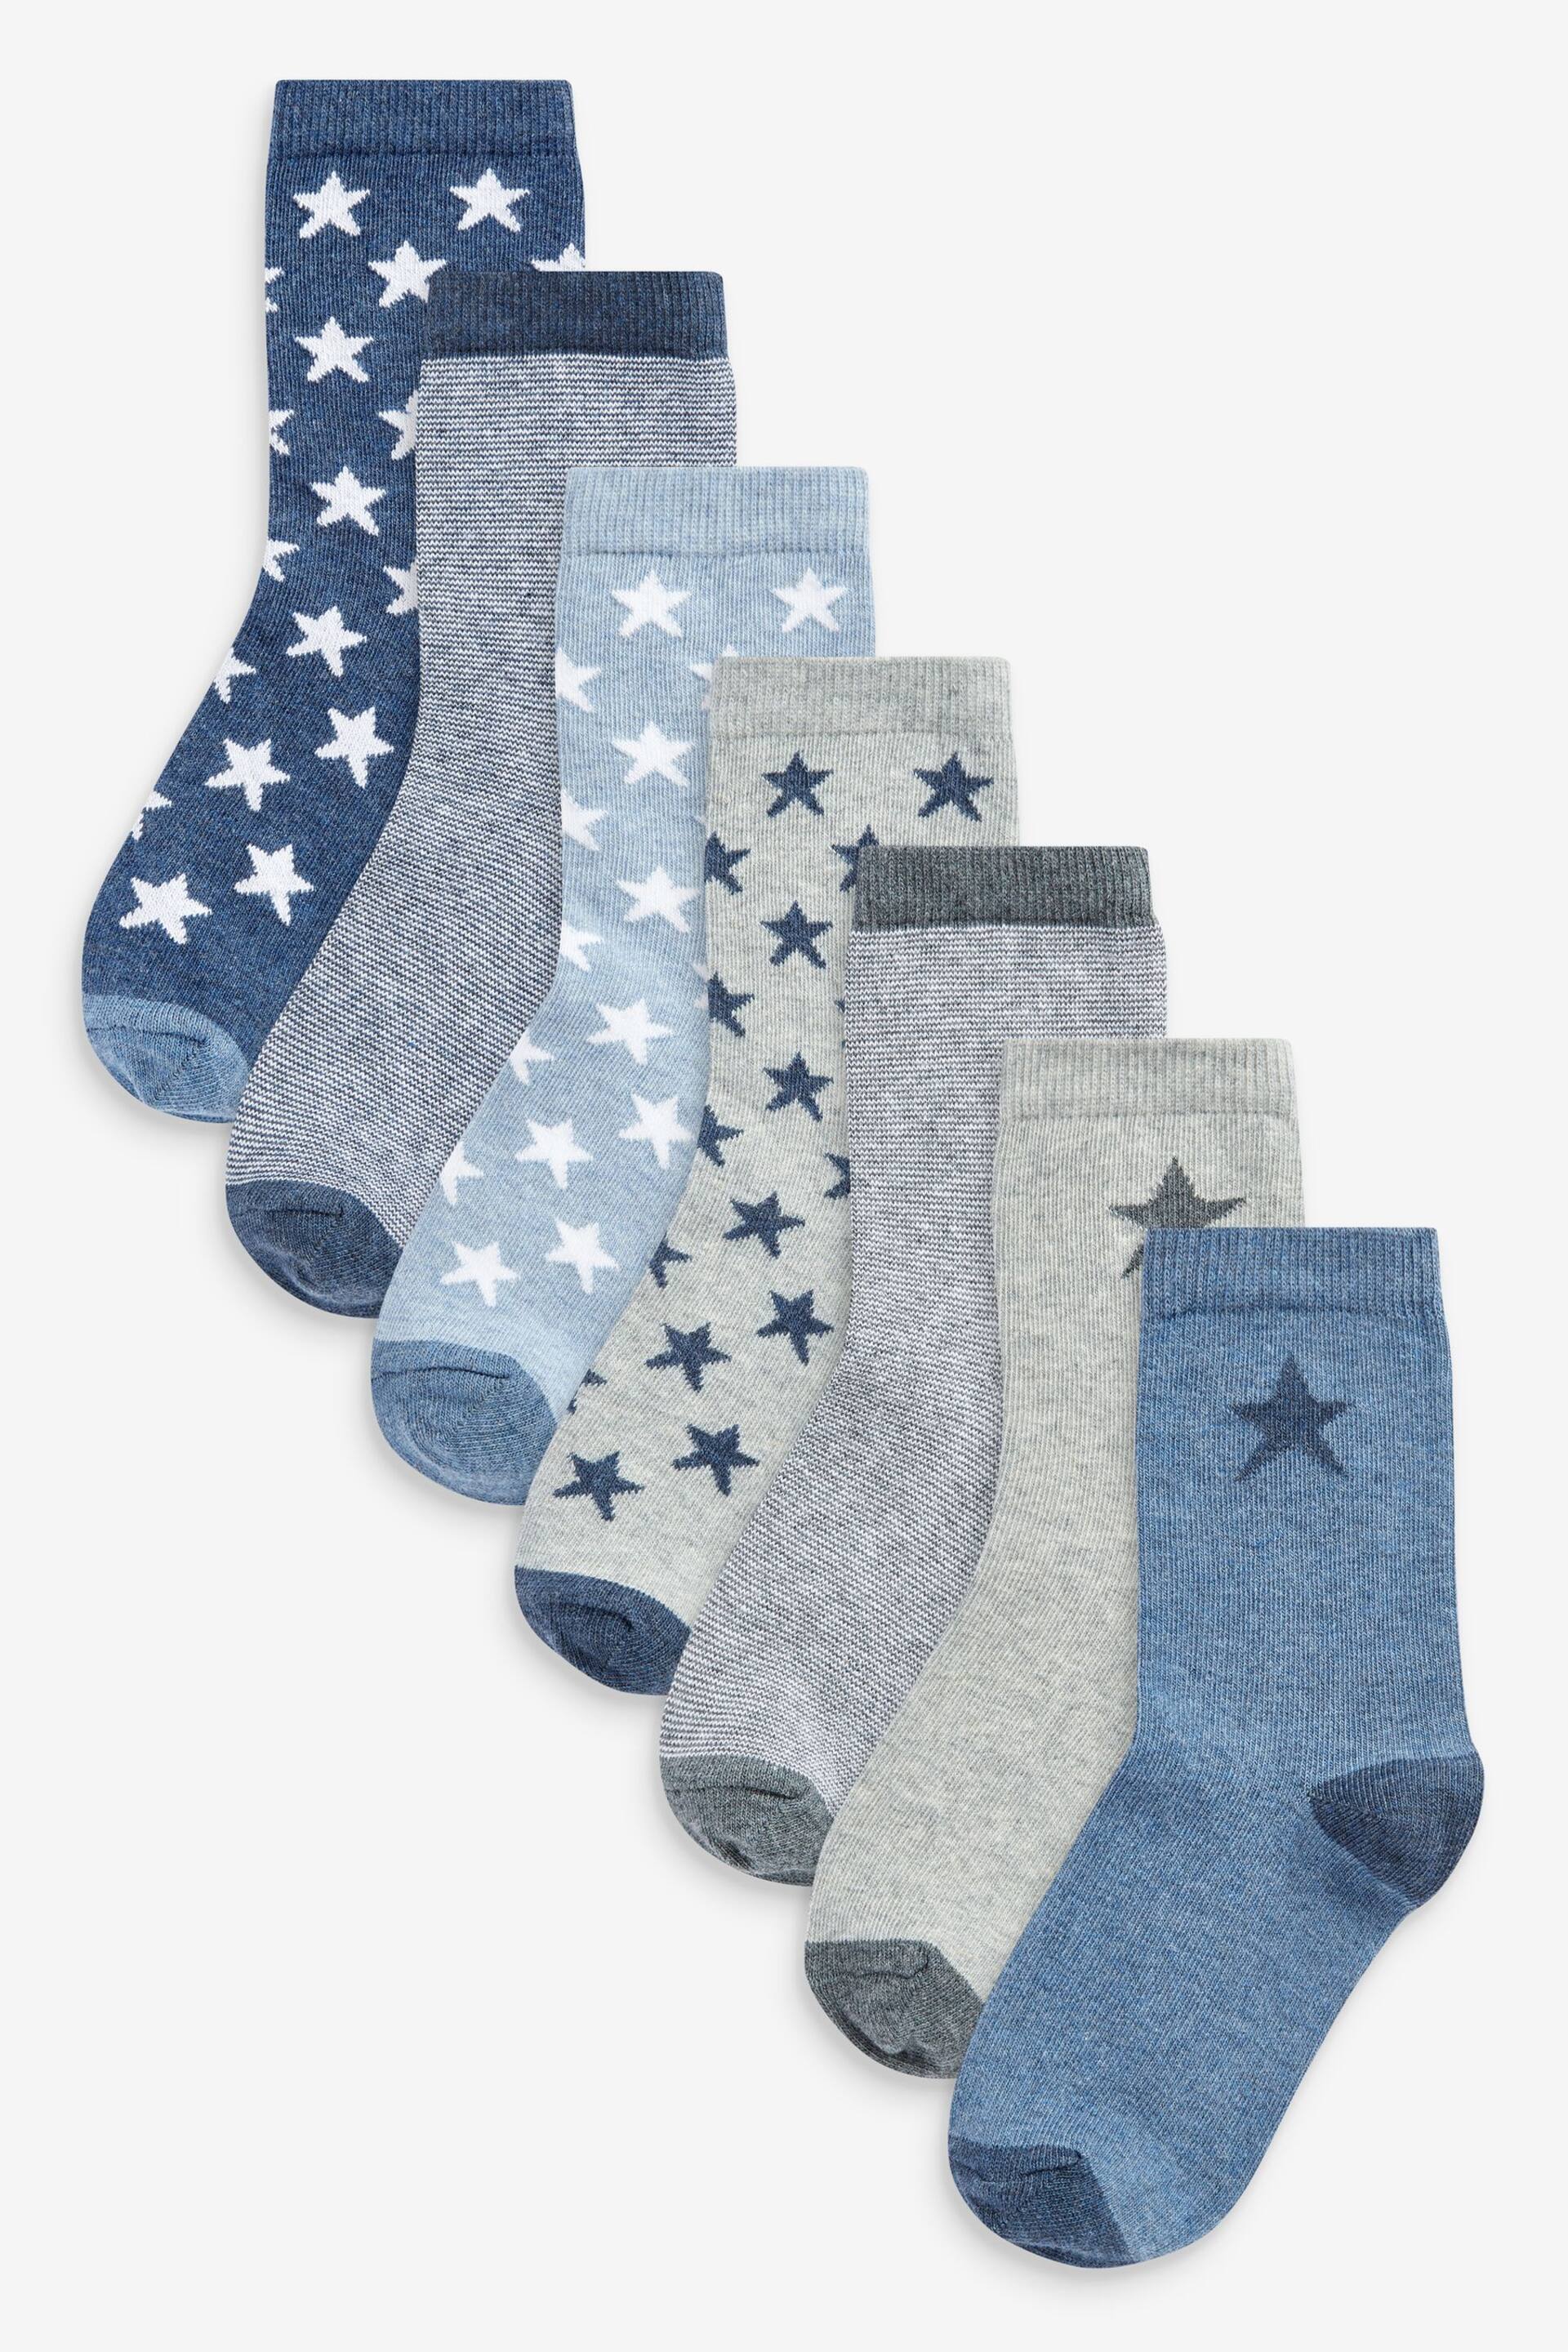 Blue Stars Cotton Rich Socks 7 Pack - Image 1 of 9